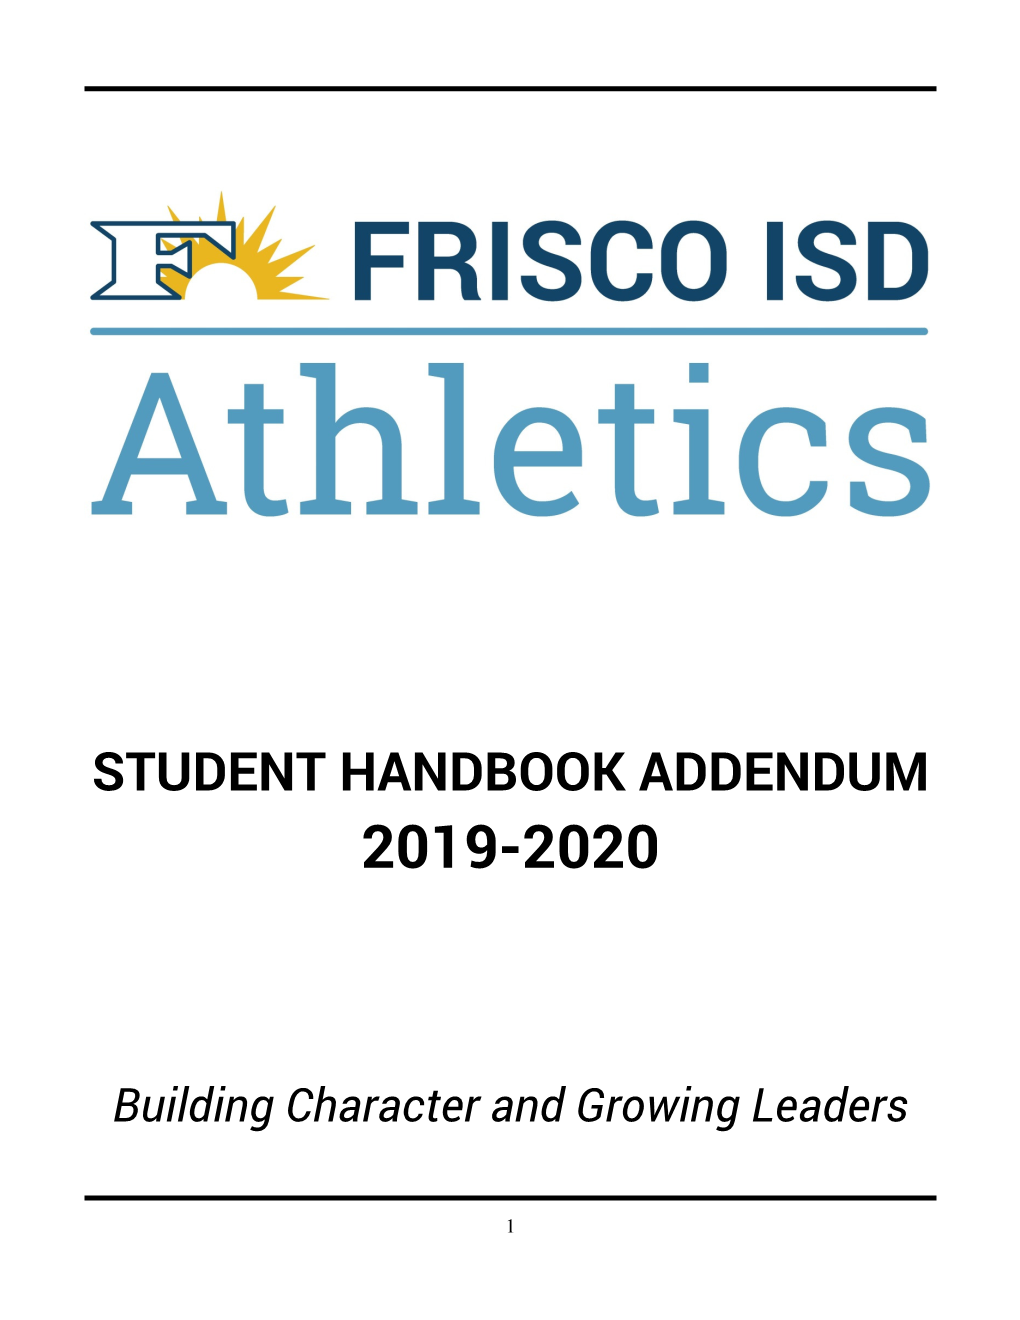 Student Handbook Addendum 2019-2020